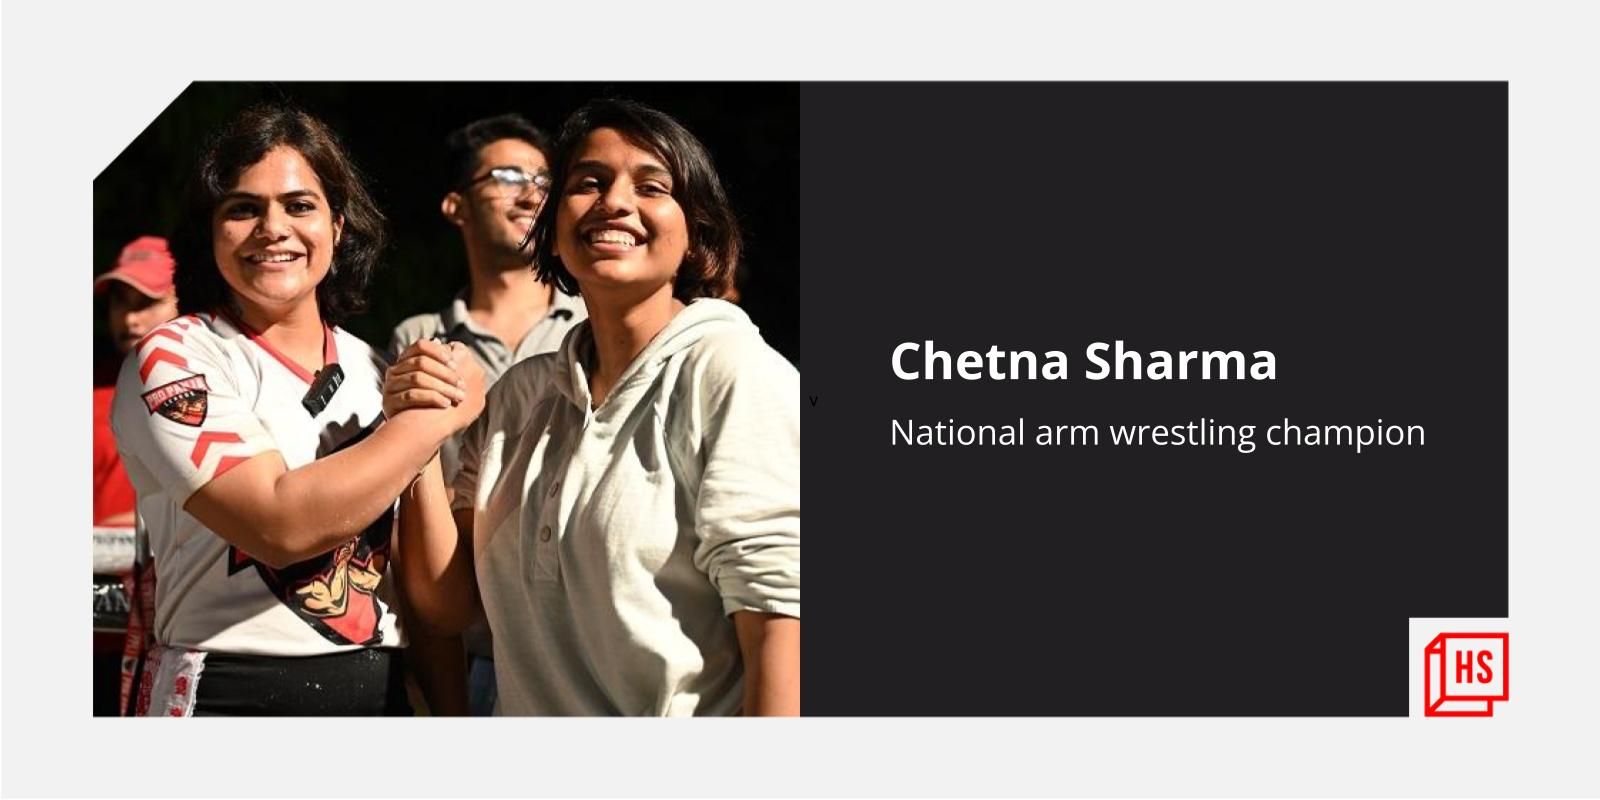 Meet arm-wrestling champion Chetna Sharma who has set her sights on international titles